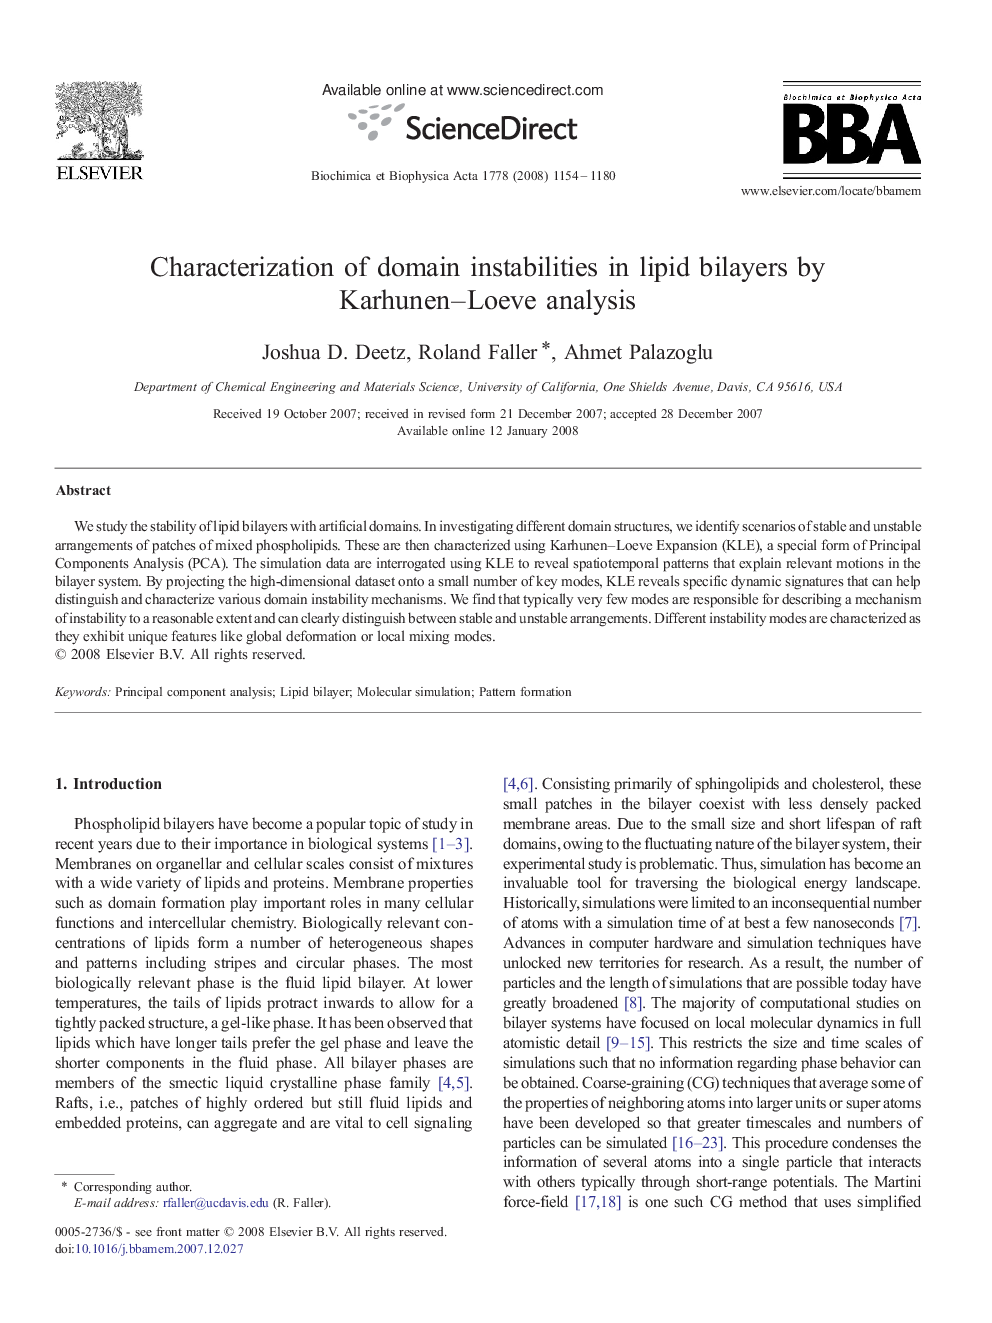 Characterization of domain instabilities in lipid bilayers by Karhunen–Loeve analysis